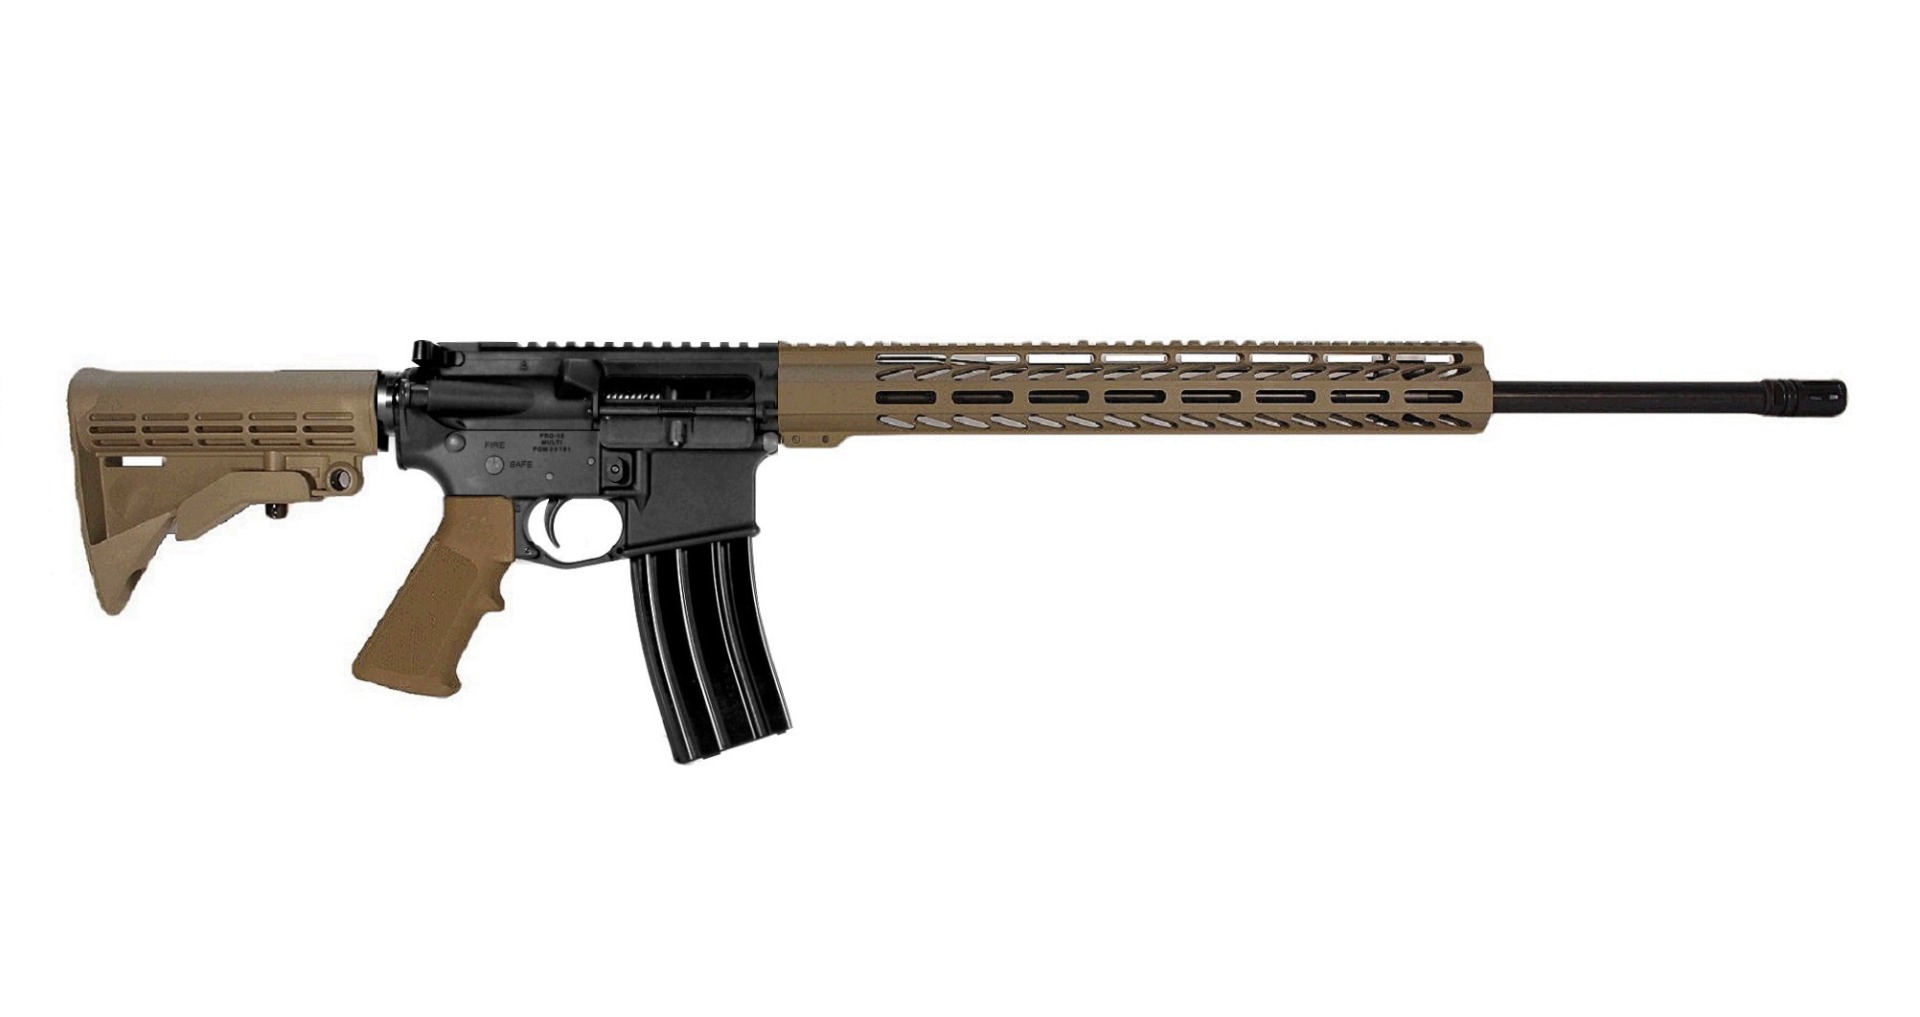 22 inch 6.5 Grendel AR-15 Rifle in BLK/FDE